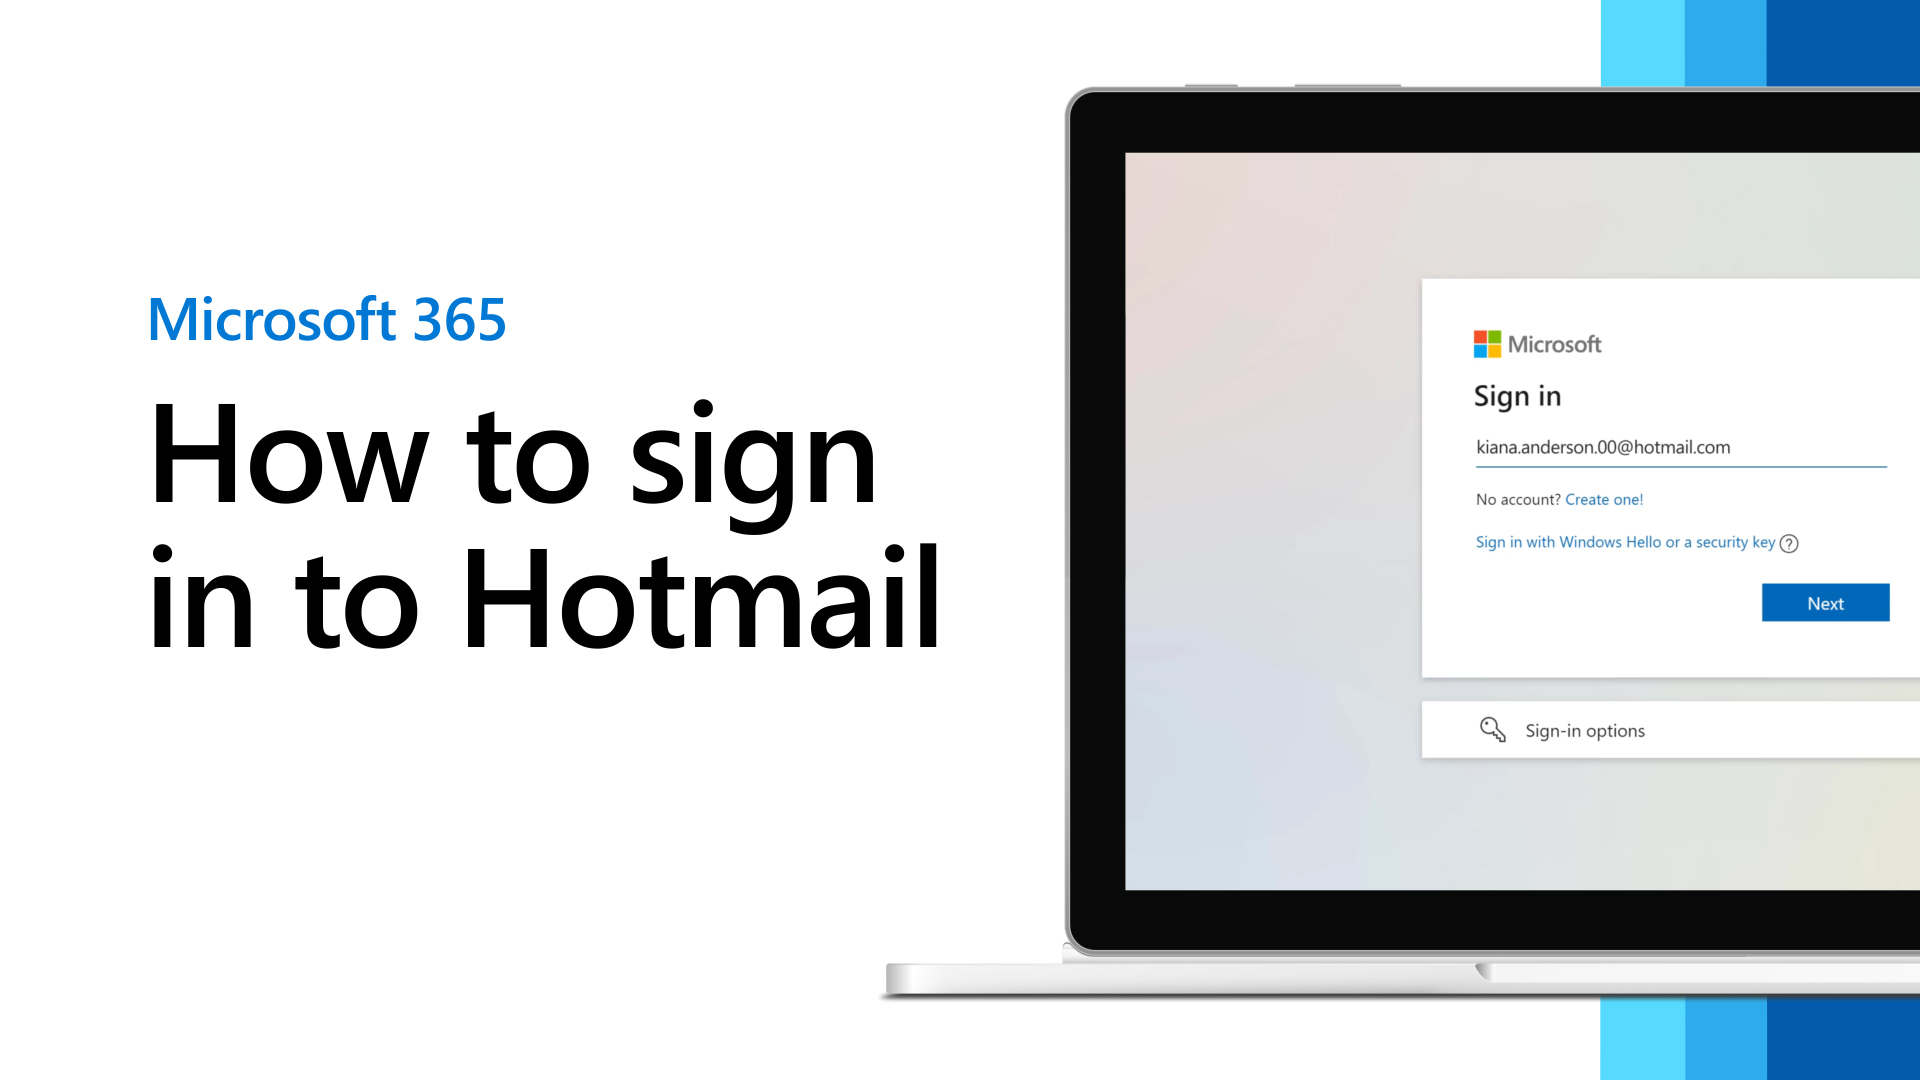 hotmail - hotmail sign up - hotmail signup - hotmail register - www.hotmail .com